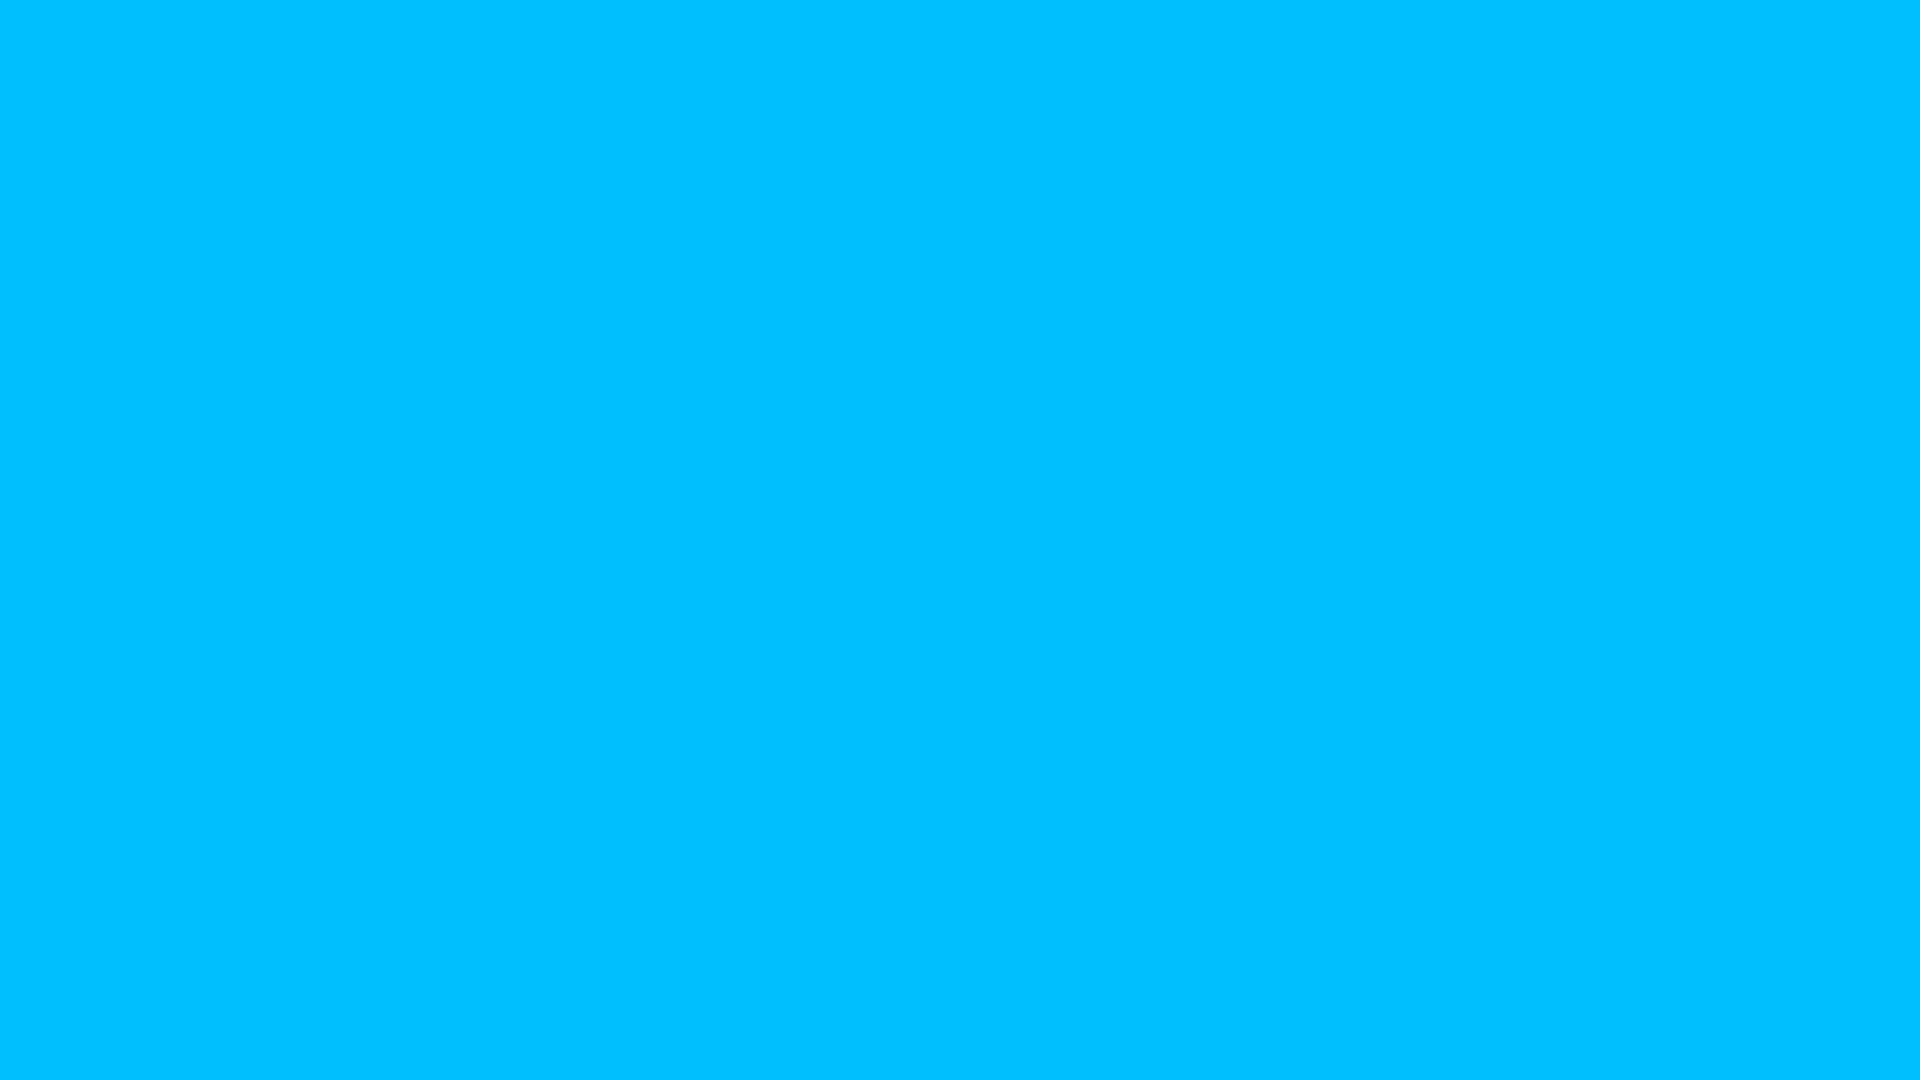 Warna Turquoise Biru Desainrumahid com